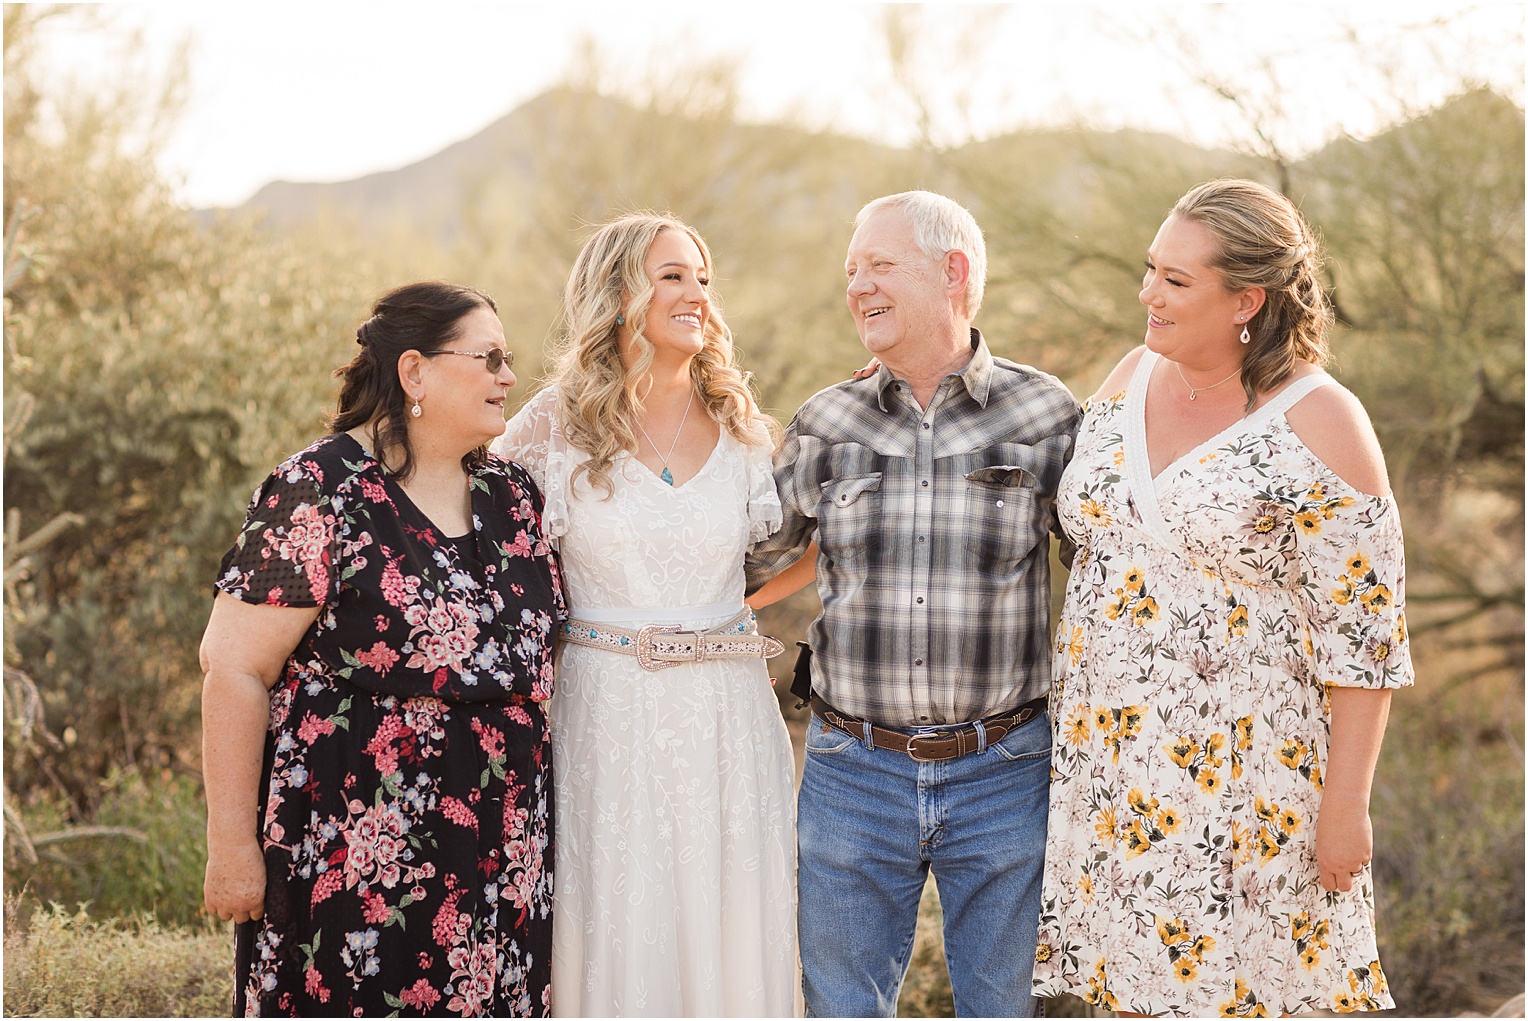 Gates Pass Wedding Tucson Arizona Andrea + Cameron family photos